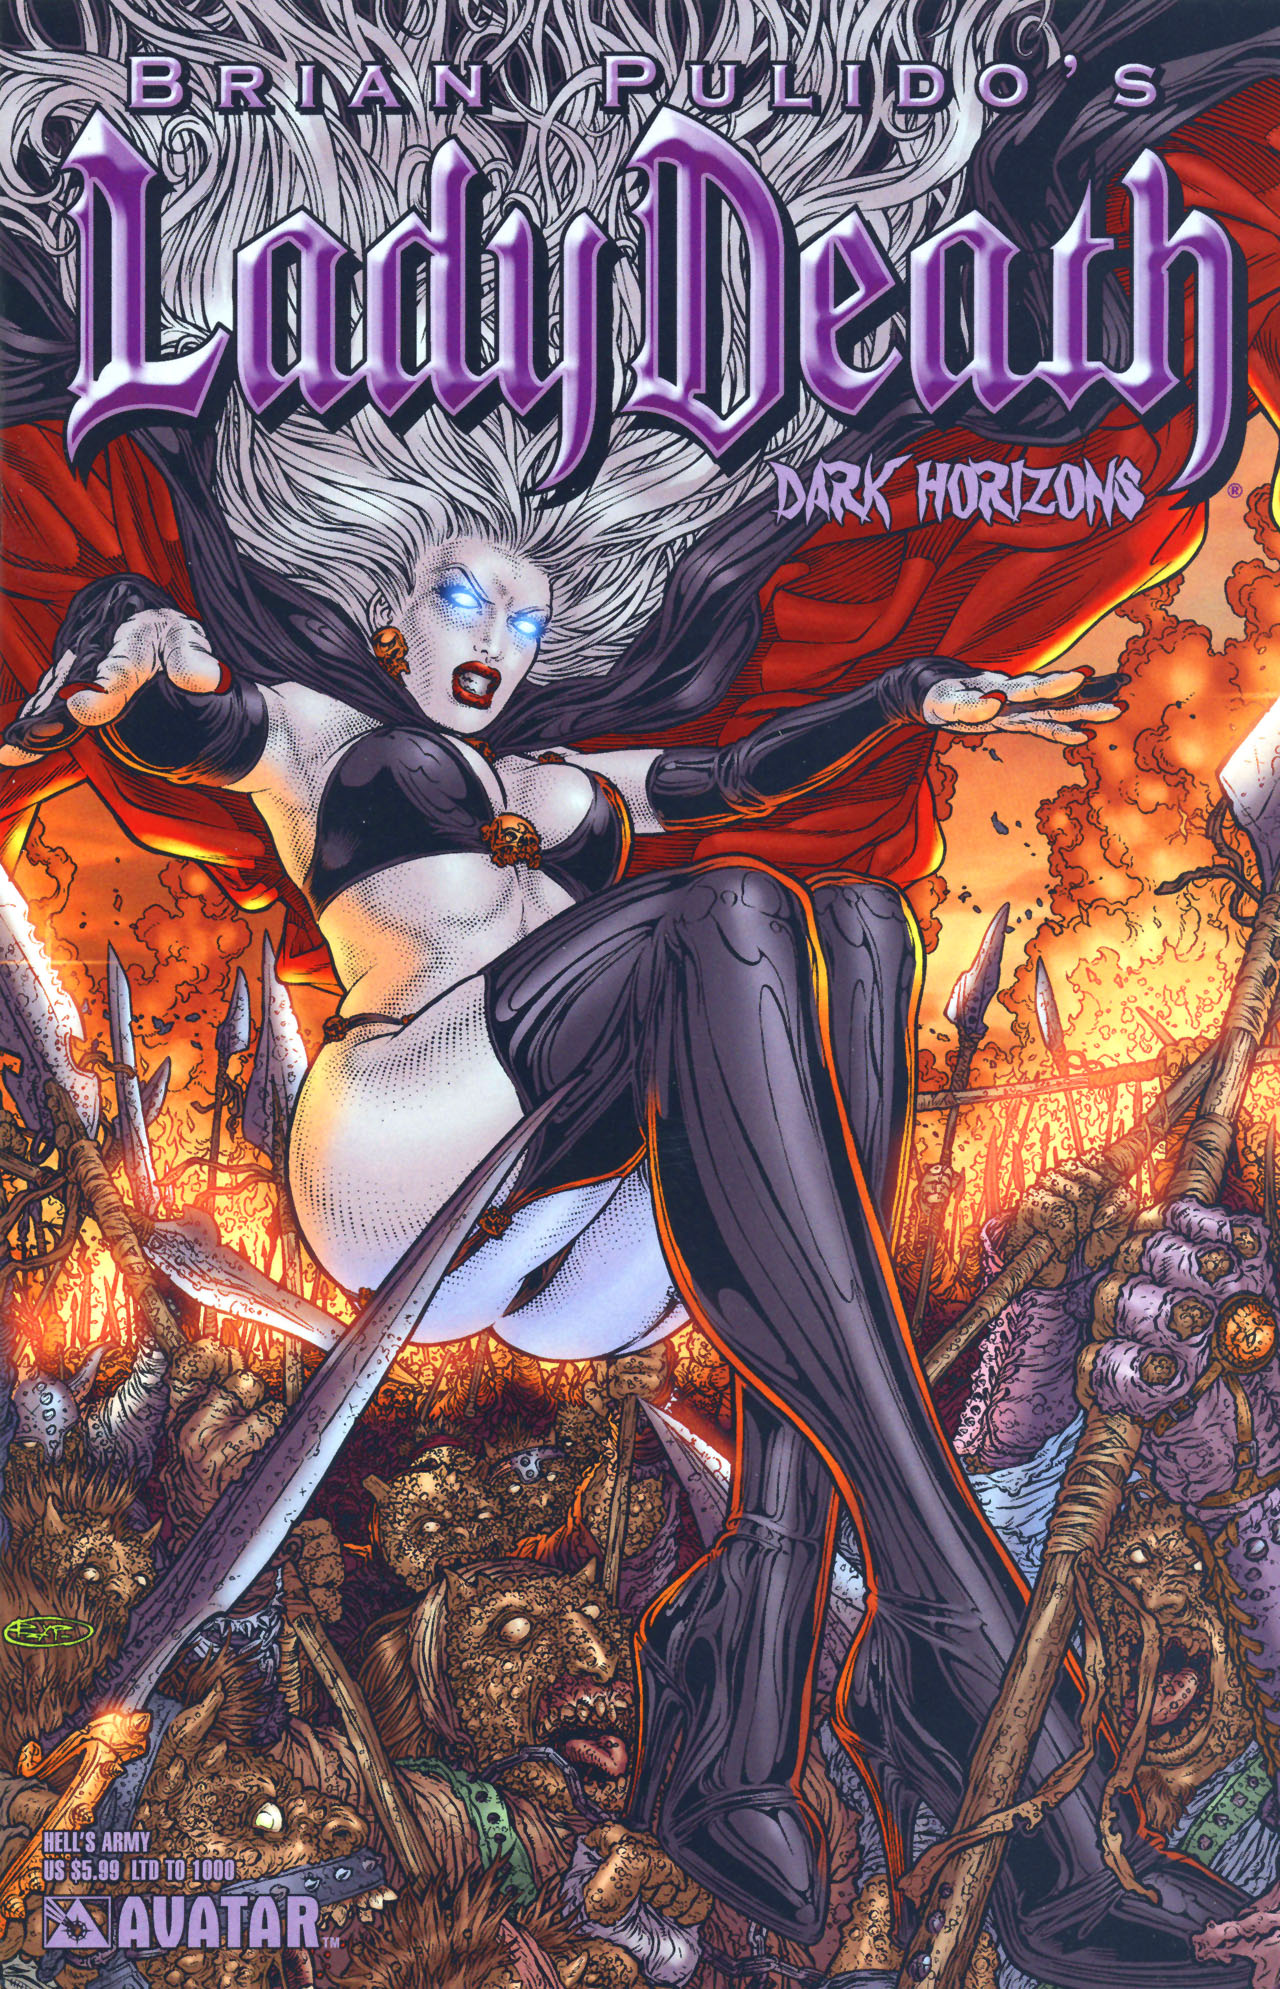 Read online Brian Pulido's Lady Death: Dark Horizons comic -  Issue # Full - 8